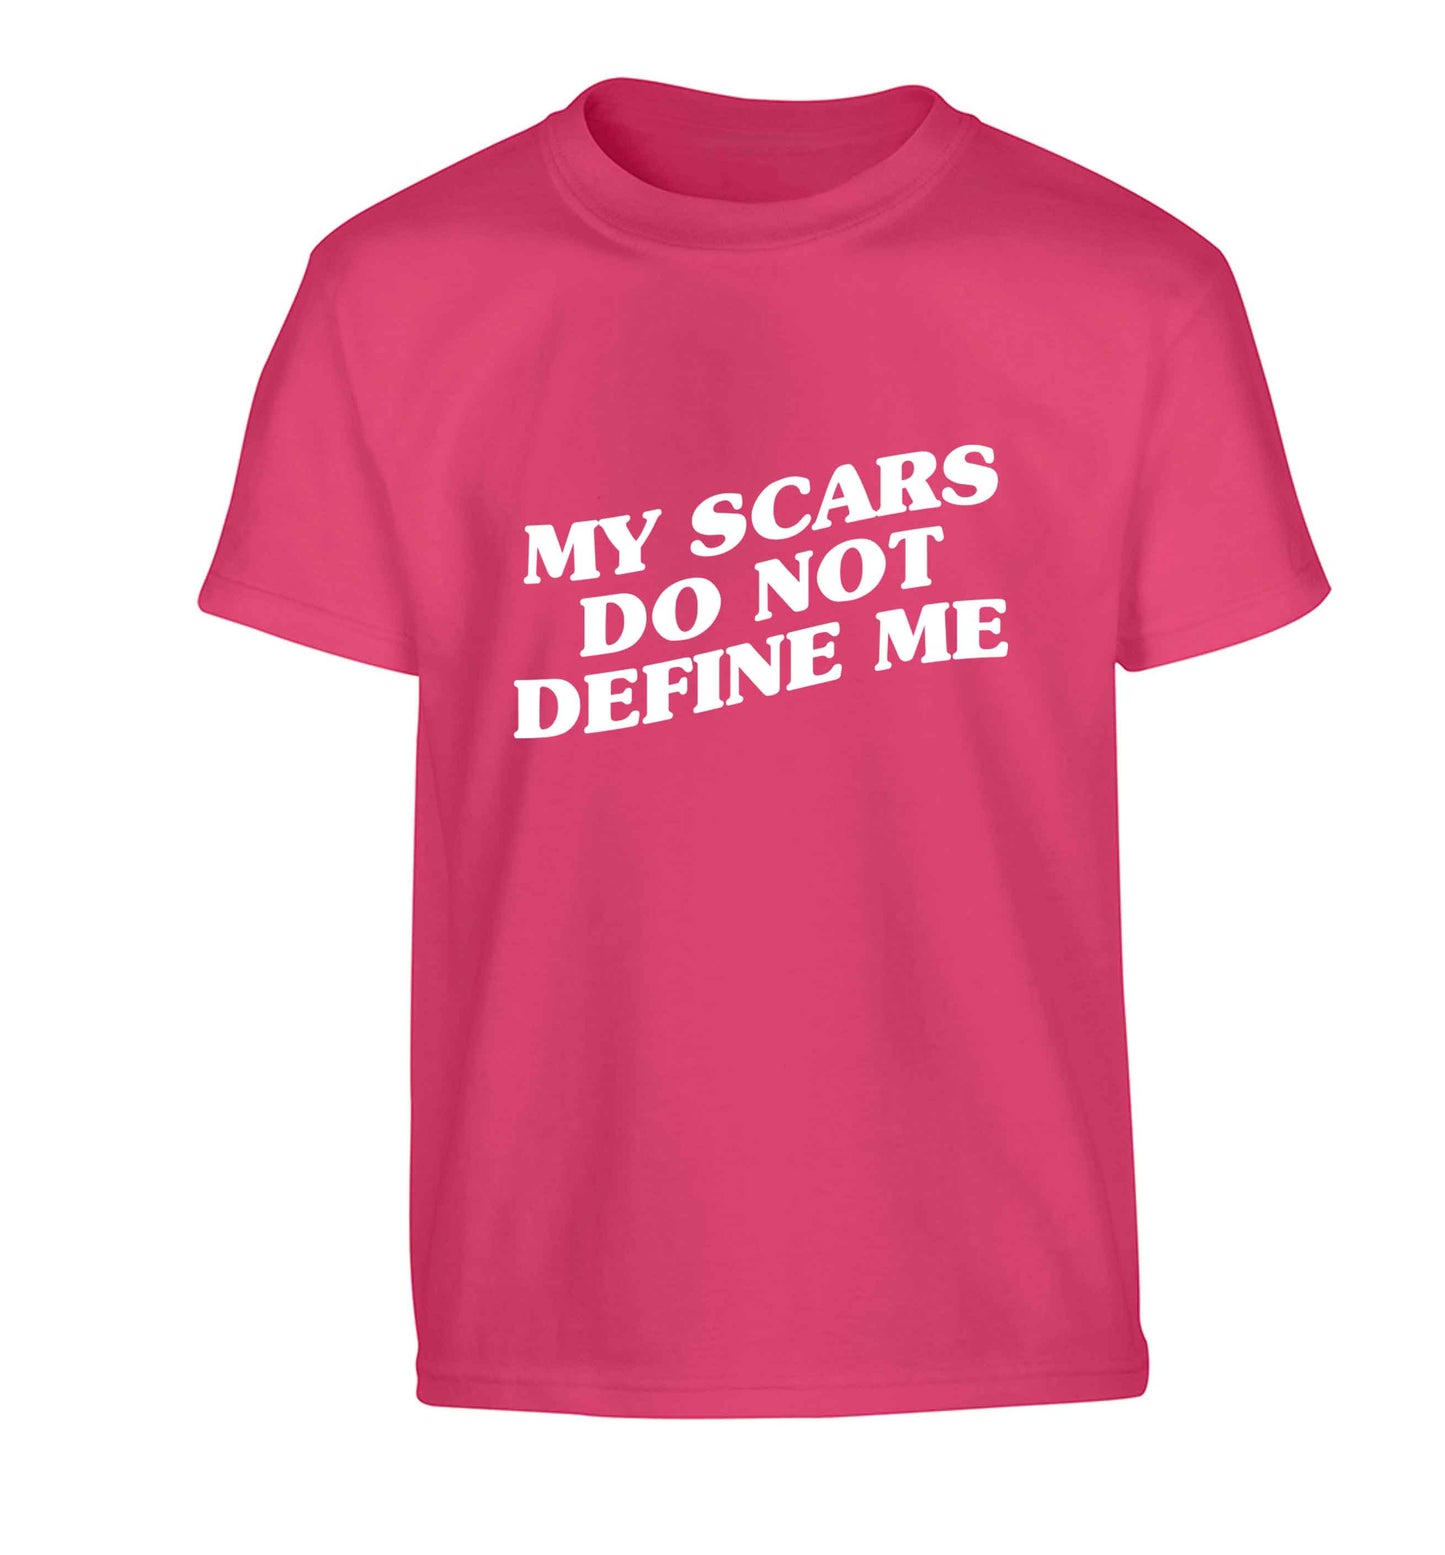 My scars do not define me Children's pink Tshirt 12-13 Years